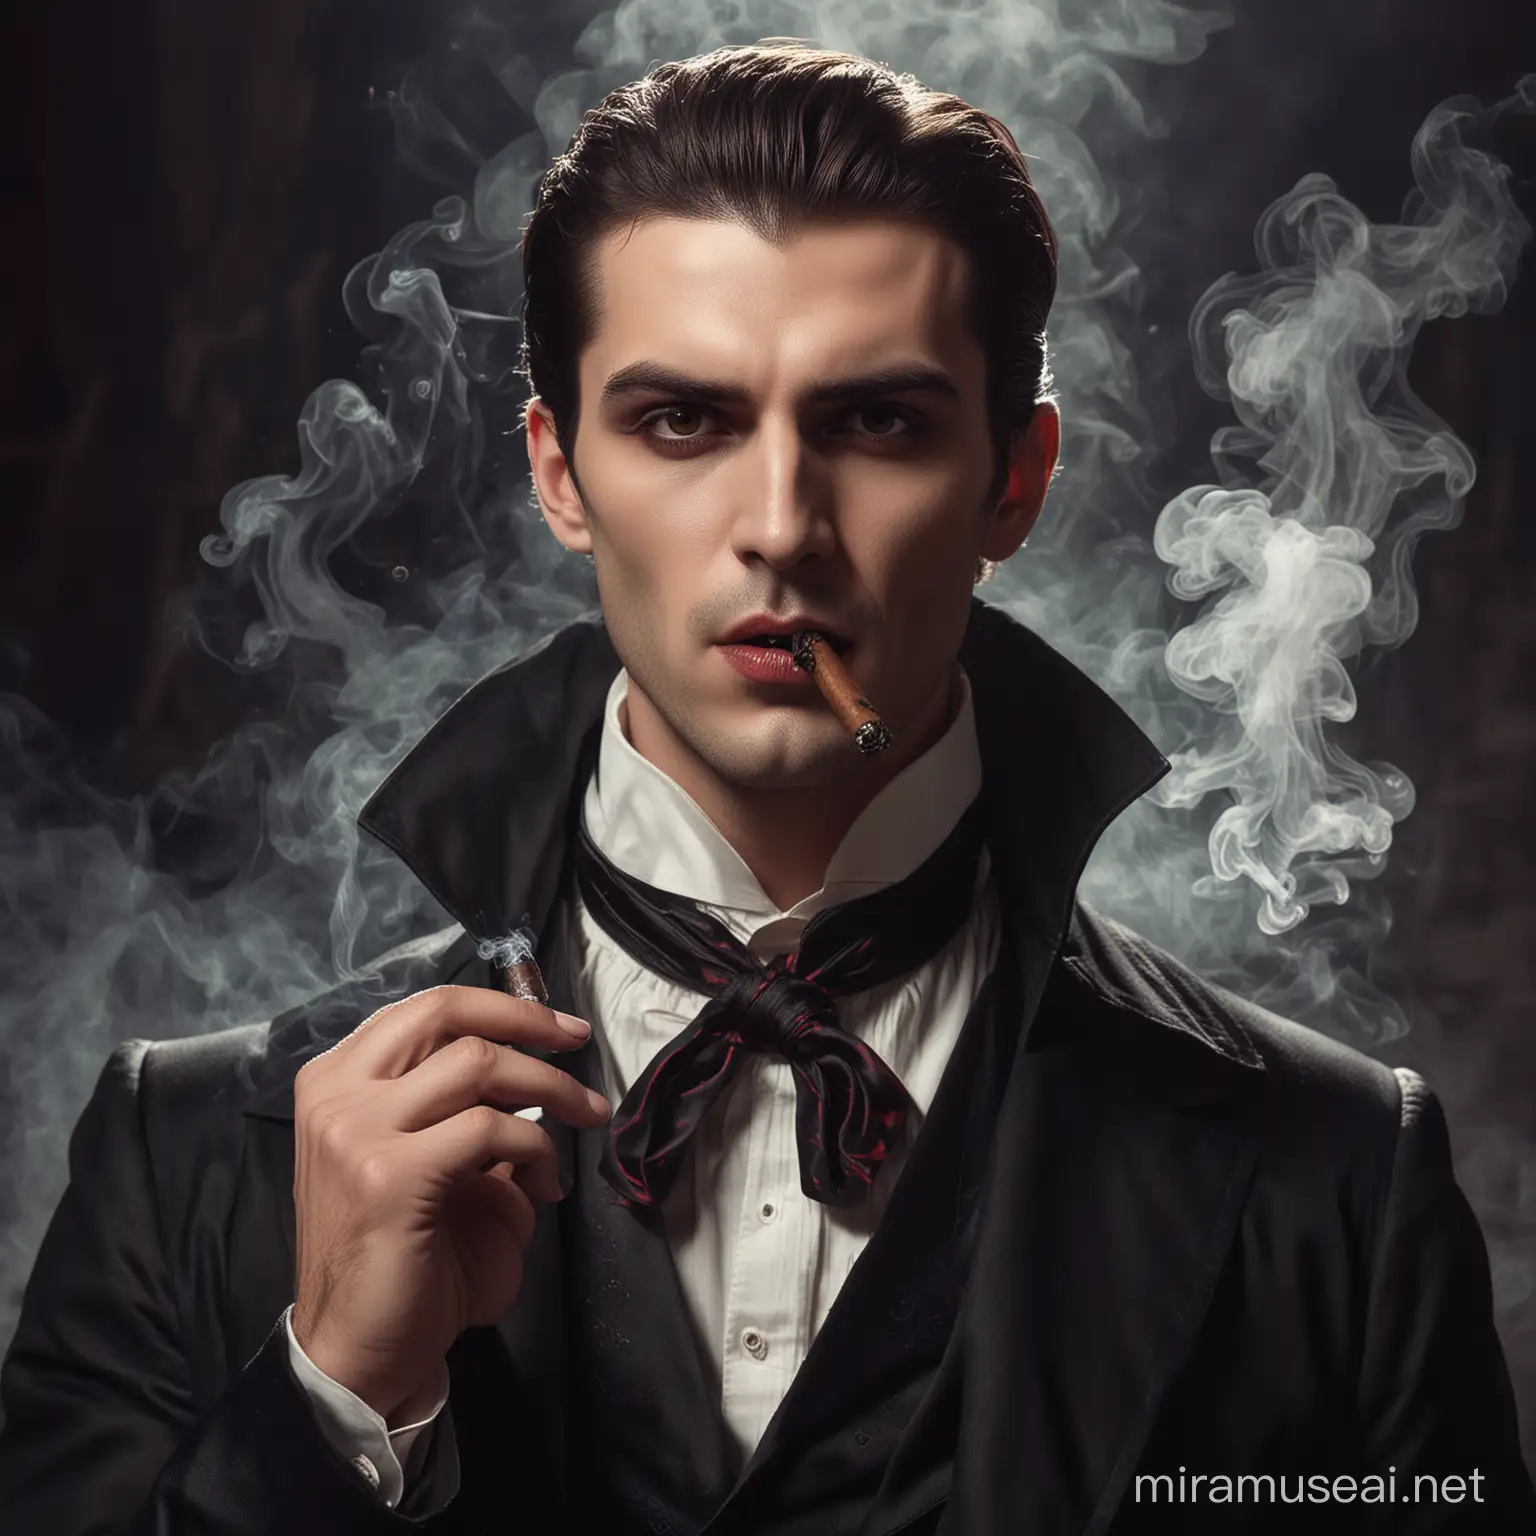 Stylish Vampire Smoking a Cigar